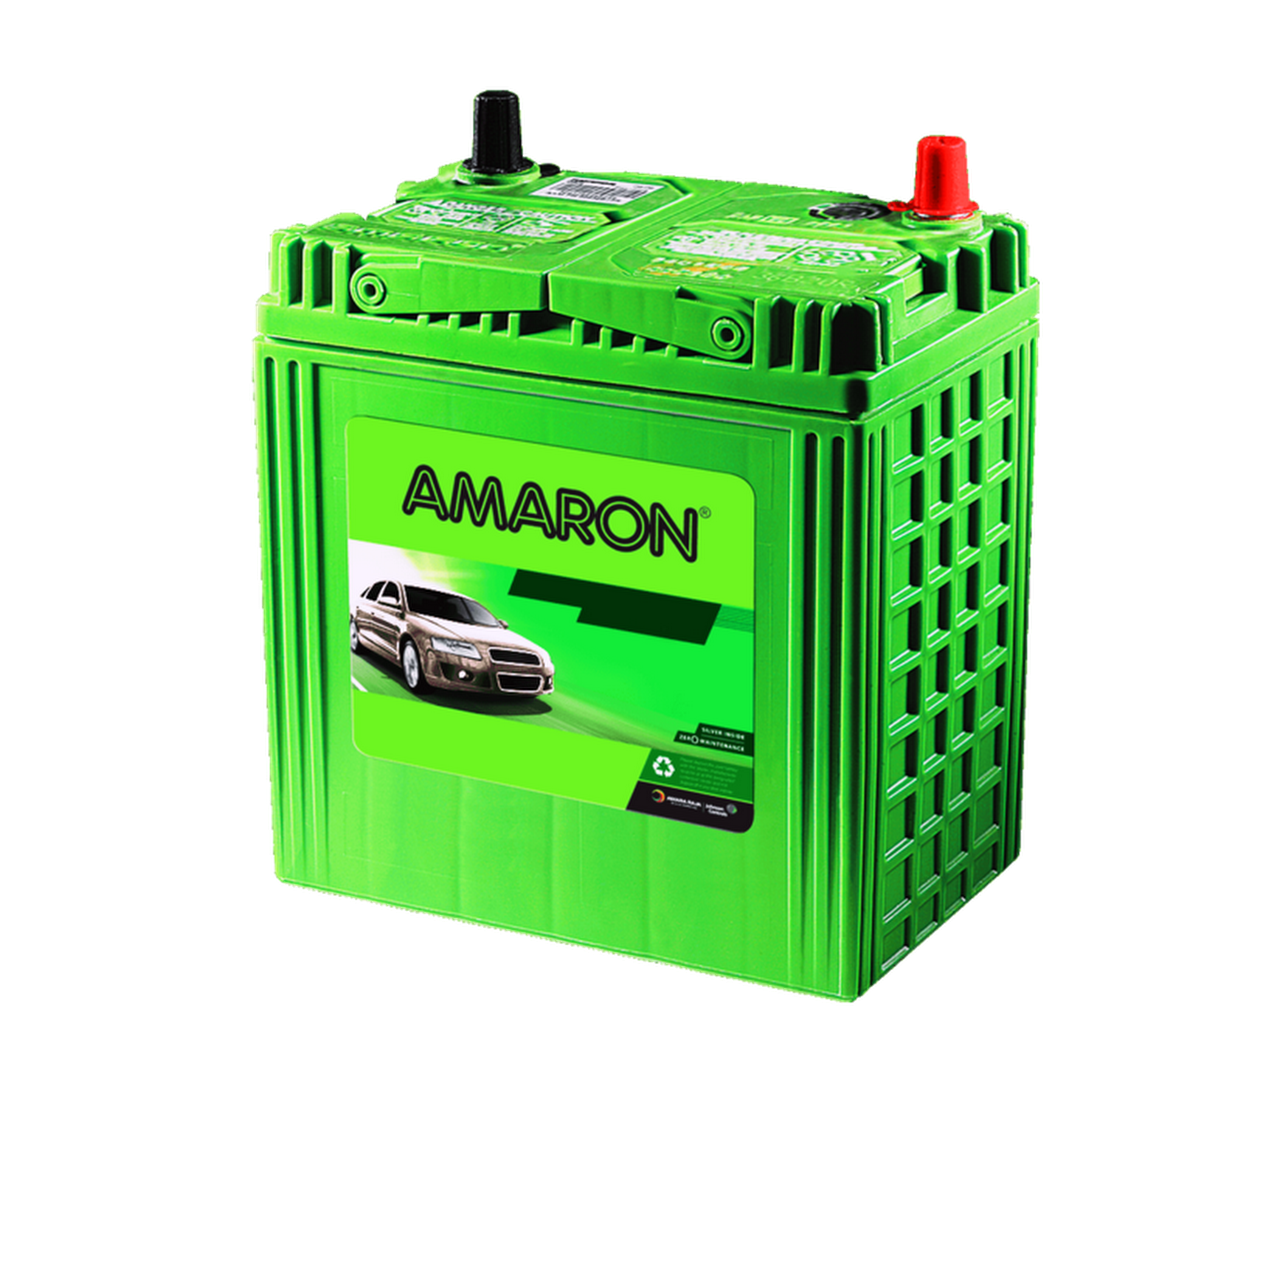 Proton Saga Iswara Amaron Battery Product for quote